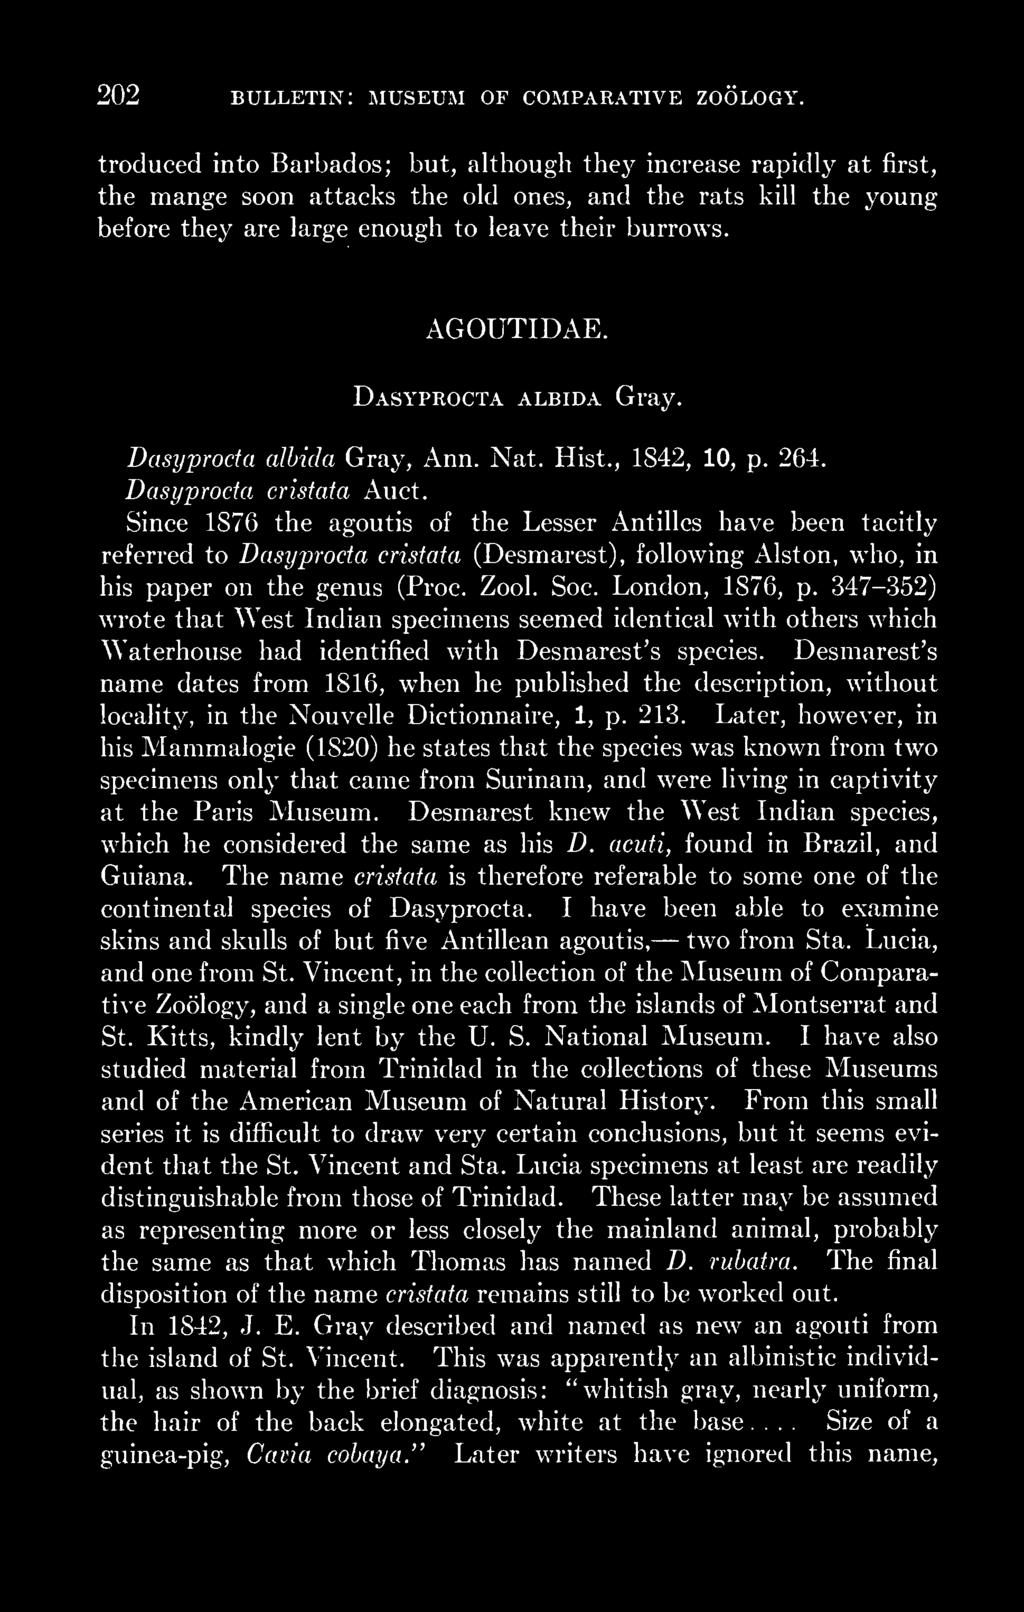 Dasyprocta albida Gray. Dasyprocta albida Gray, Ann. Nat. Hist., 1842, 10, p. 264. Dasyprocta cristata Auct.